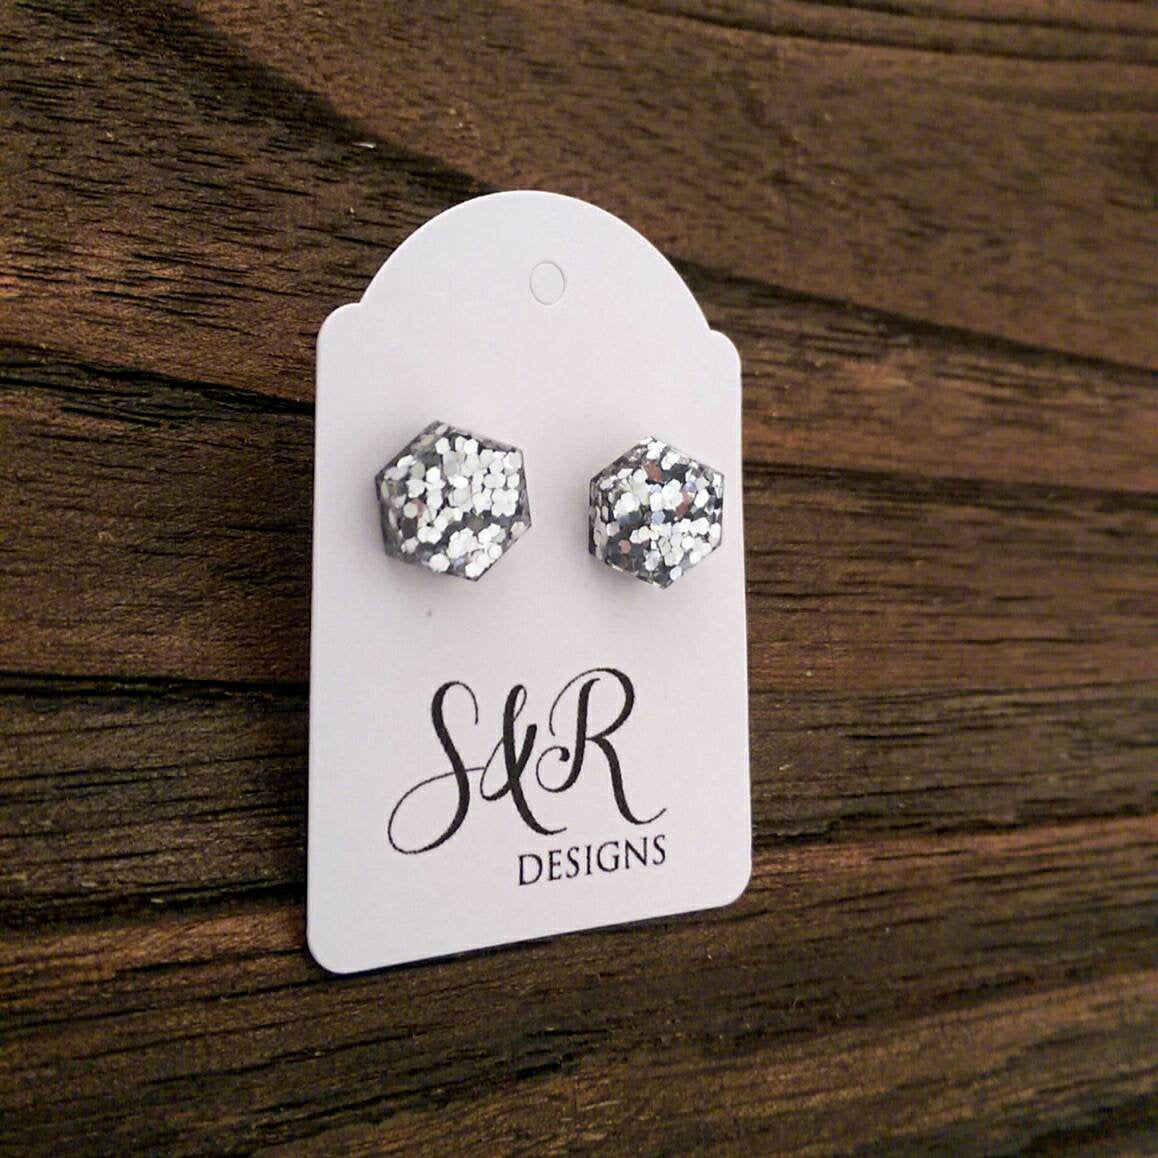 Hexagon Resin Stud Earrings, Silver Glitter Earrings. Stainless Steel Stud Earrings. 10mm